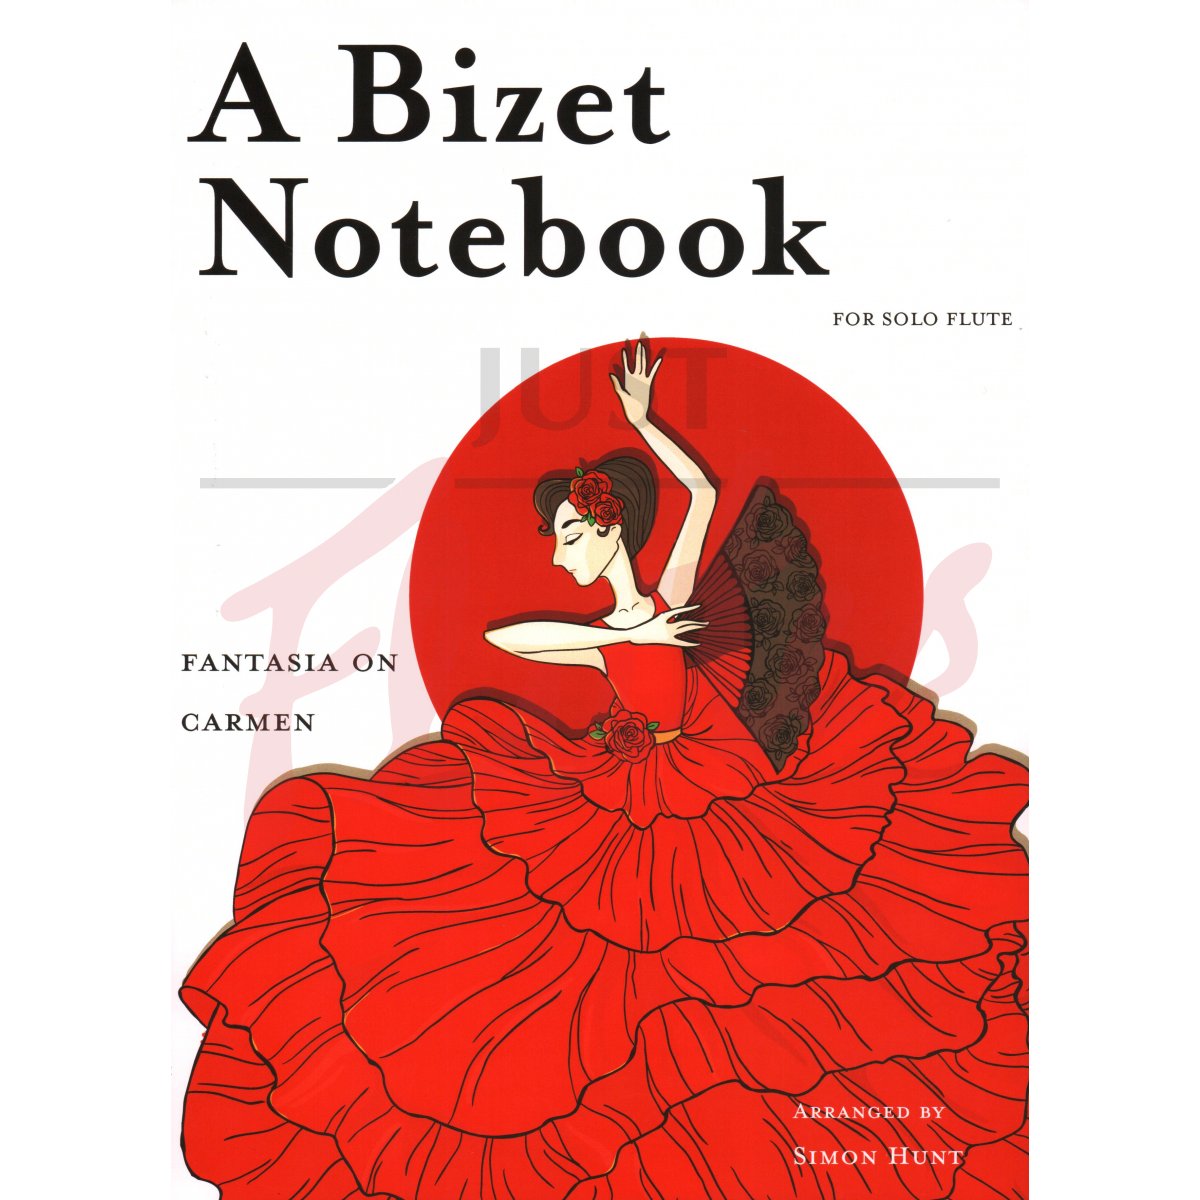 A Bizet Notebook: A Fantasia On Carmen for Solo Flute